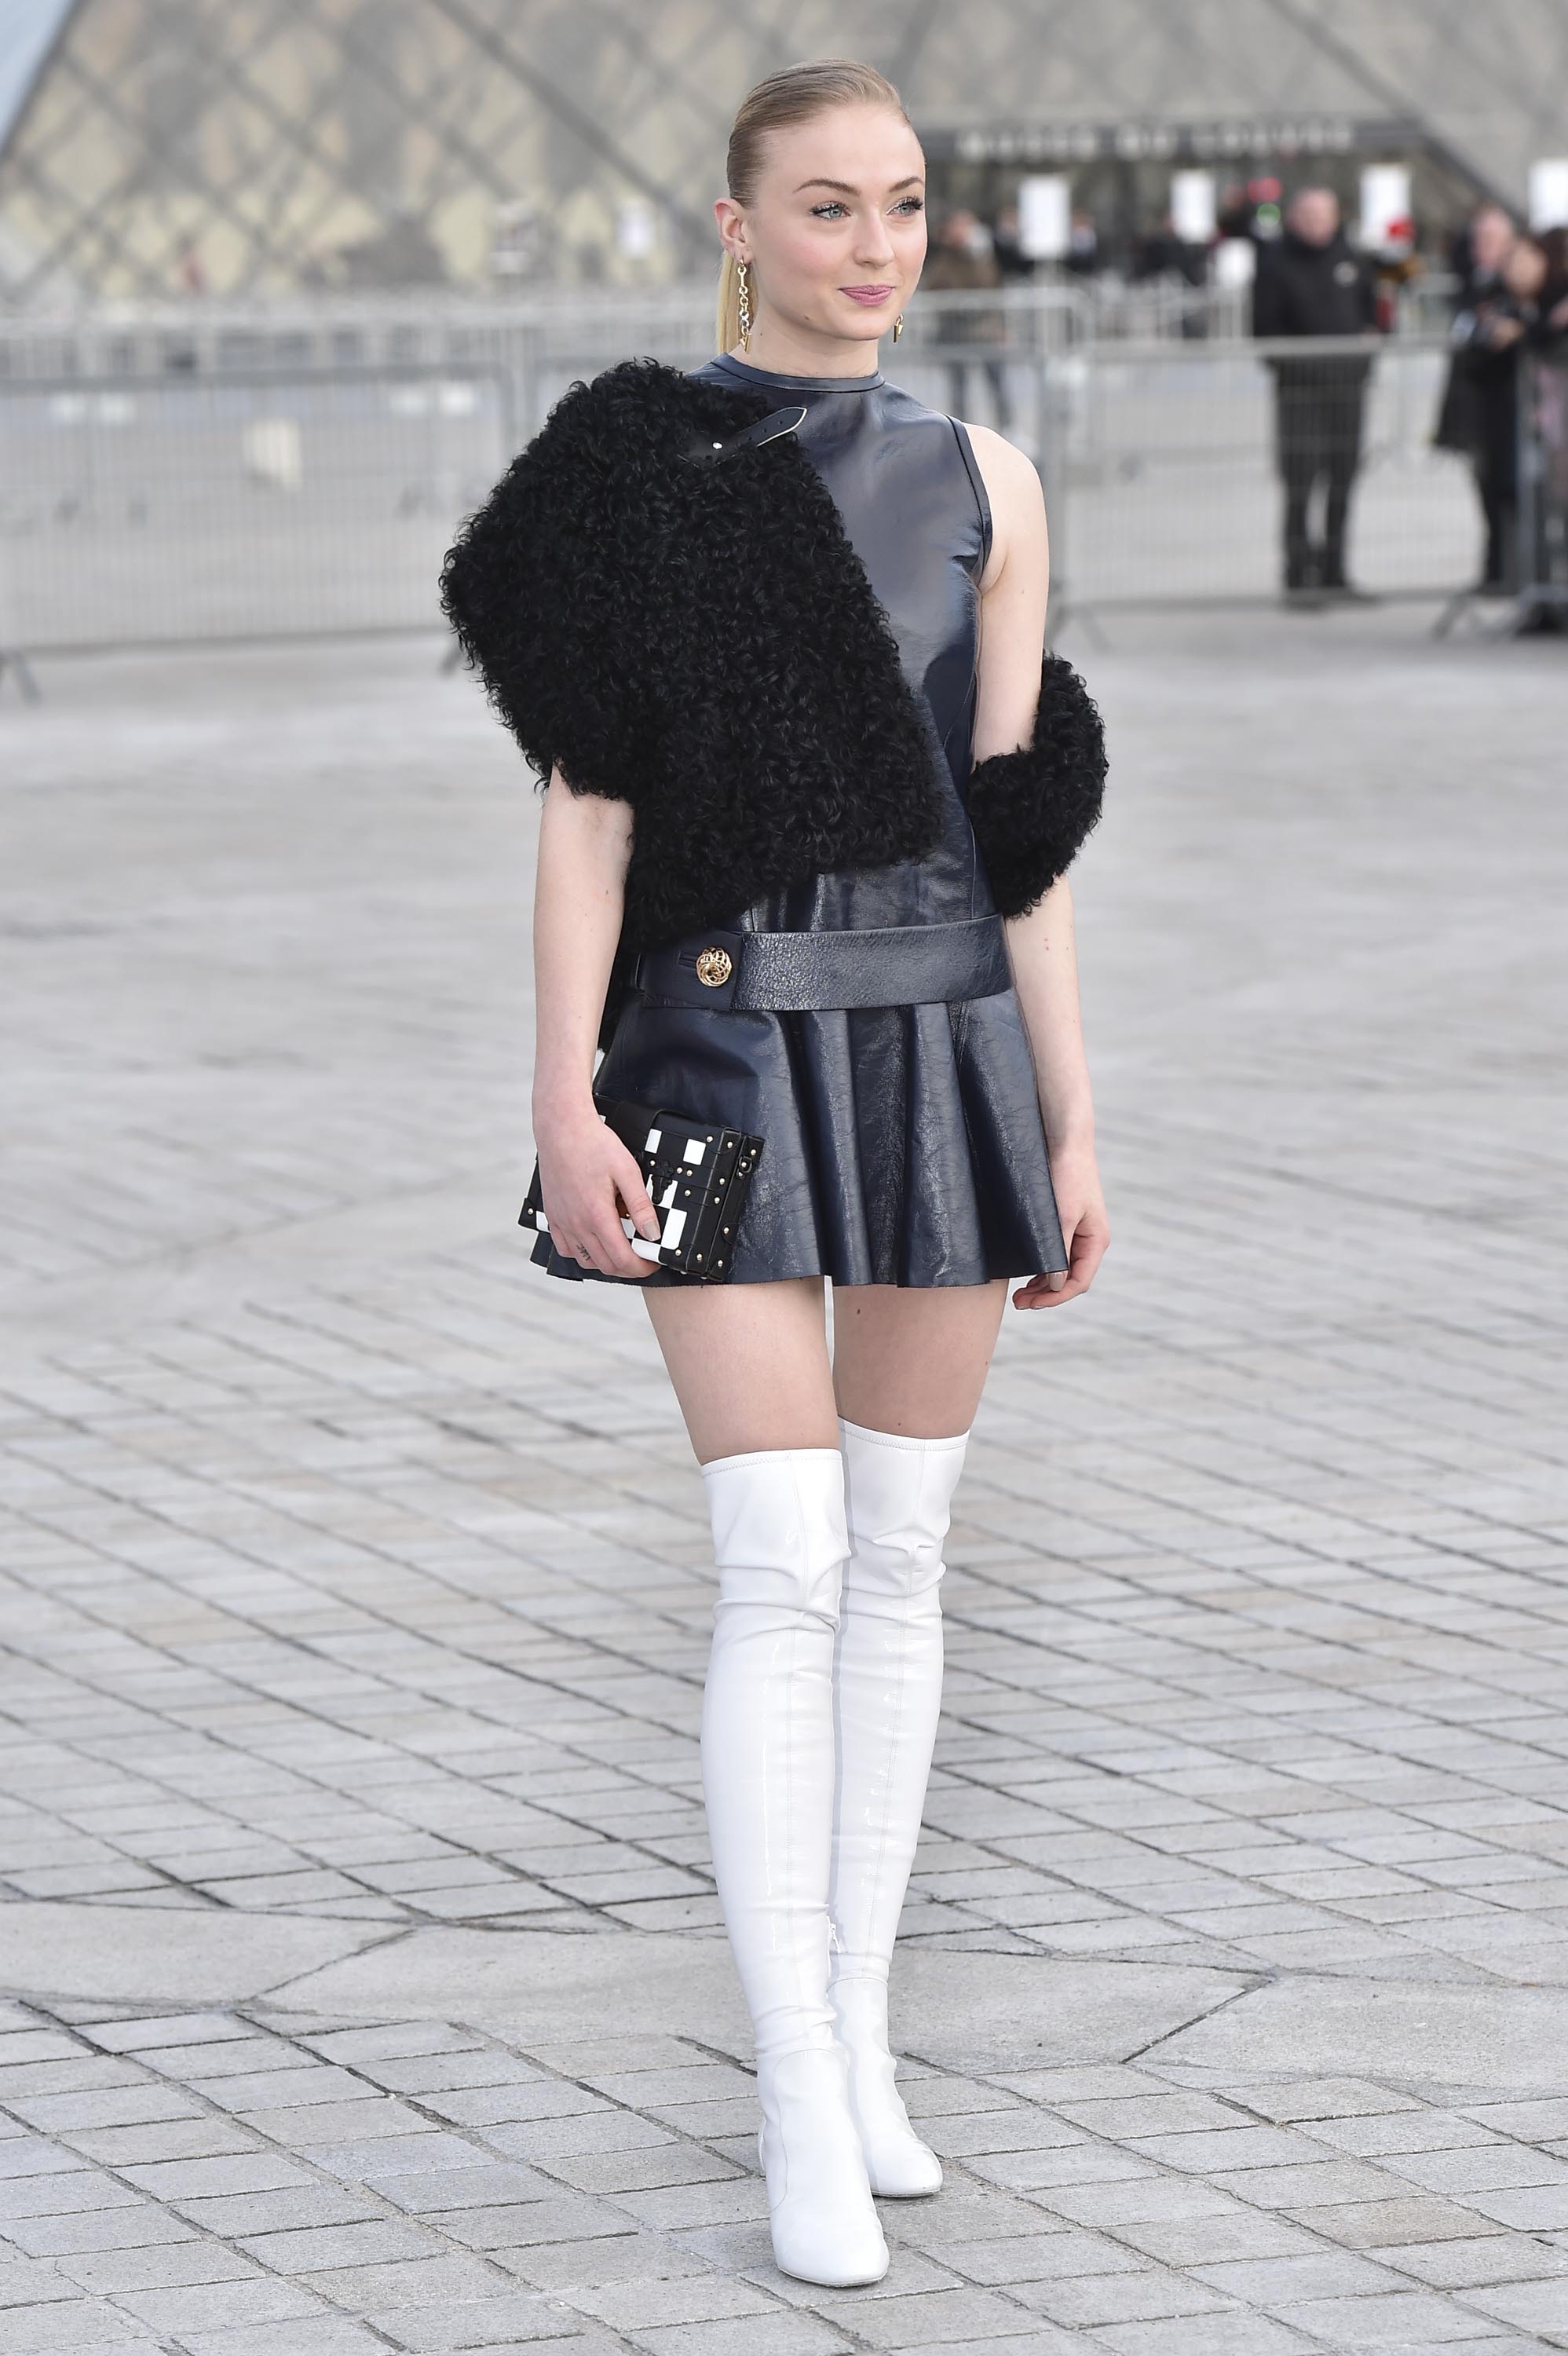 Sophie Turner attends Louis Vuitton Show